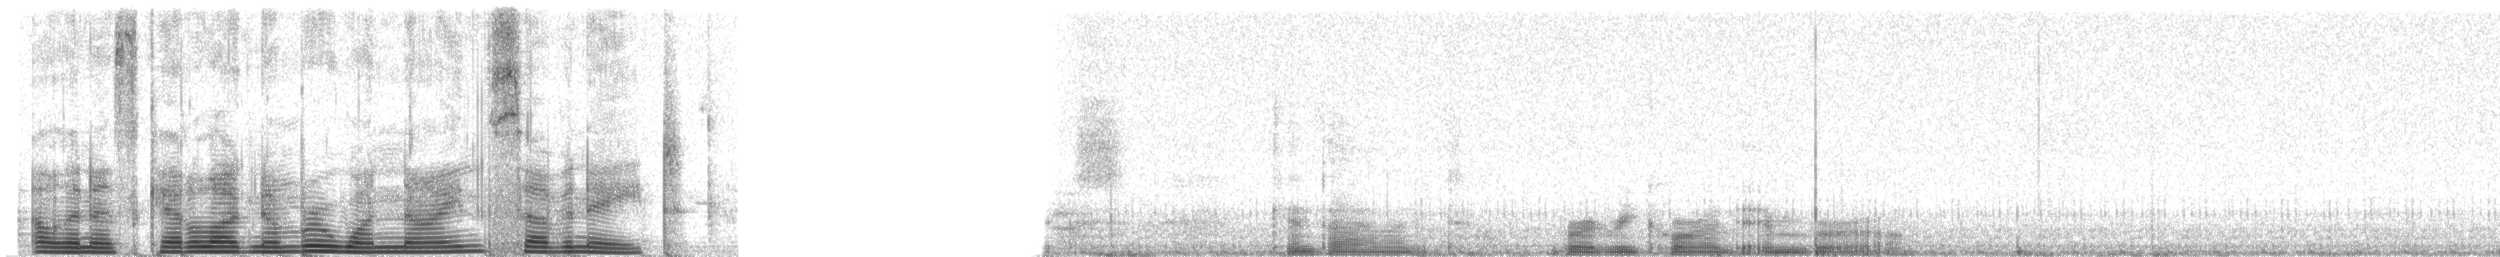 白腰叉尾海燕(leucorhoa) - ML1978